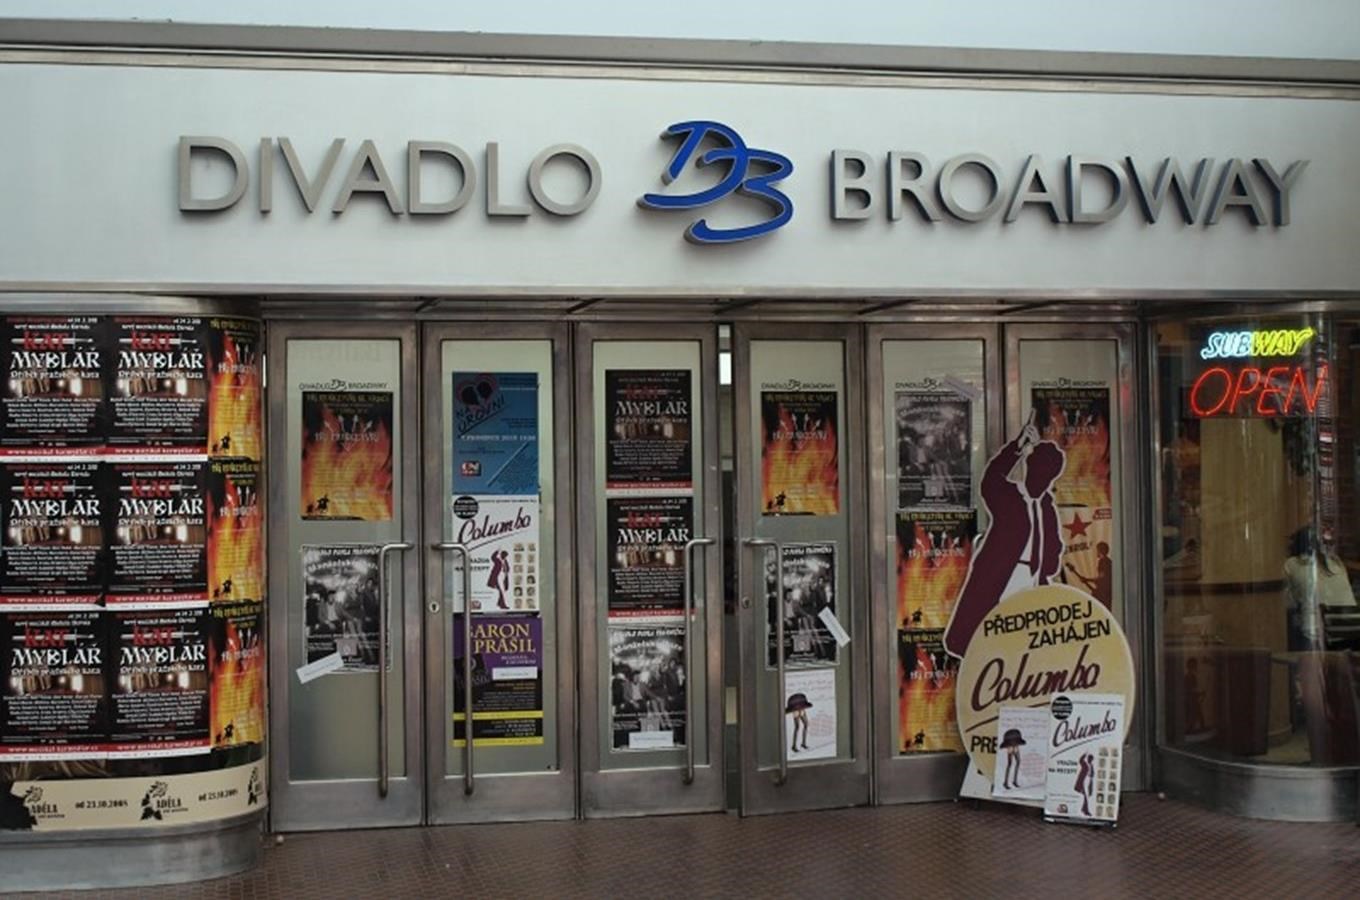 Kudy z nudy - Divadlo Broadway v Praze